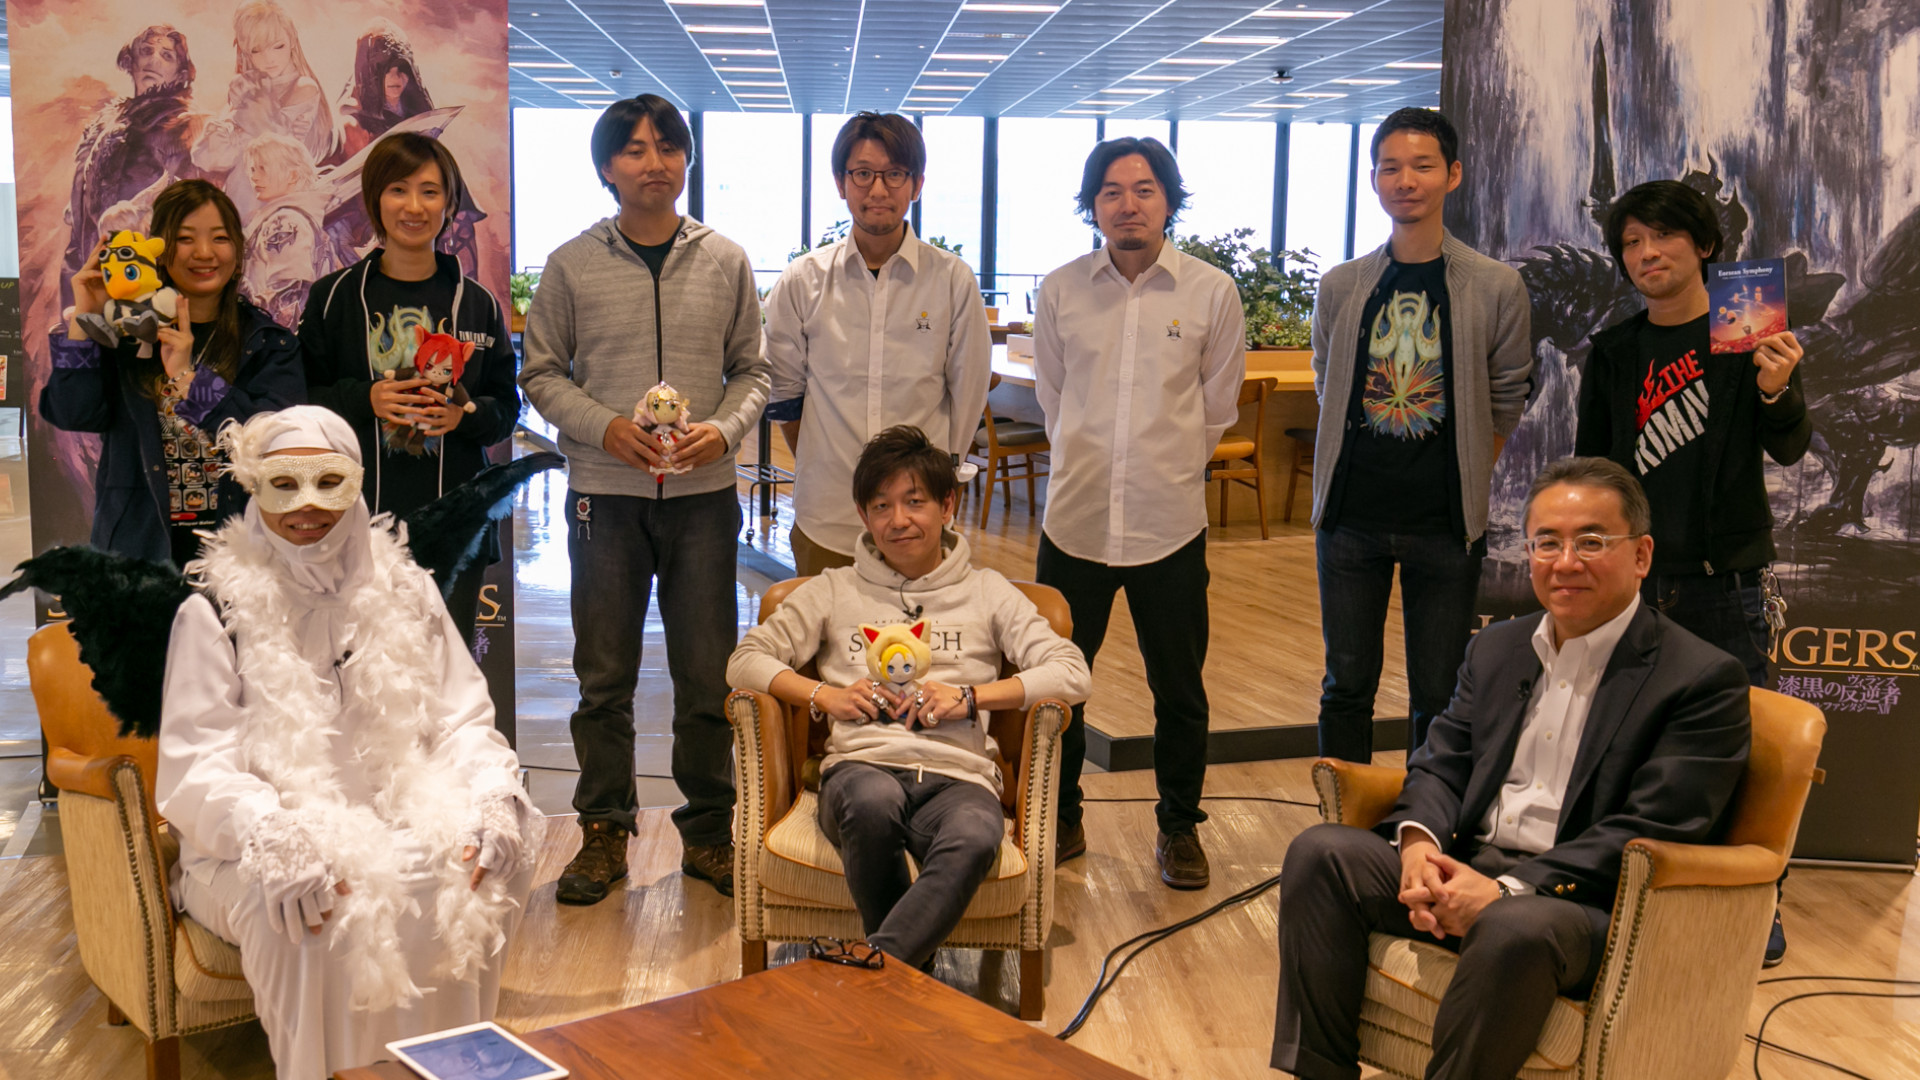 Final Fantasy XIV’s seventh 14-hour broadcast arrives next week